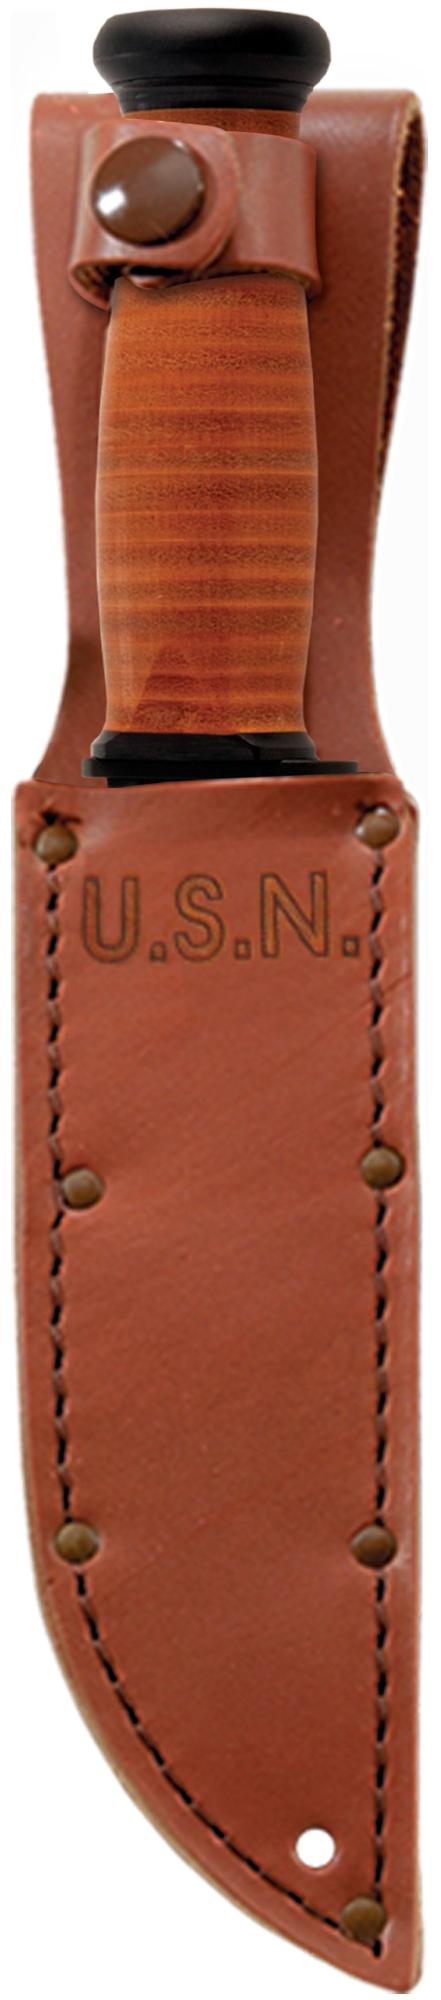 KA-BAR Mark I Brown Leather Sheath, USN #2225S